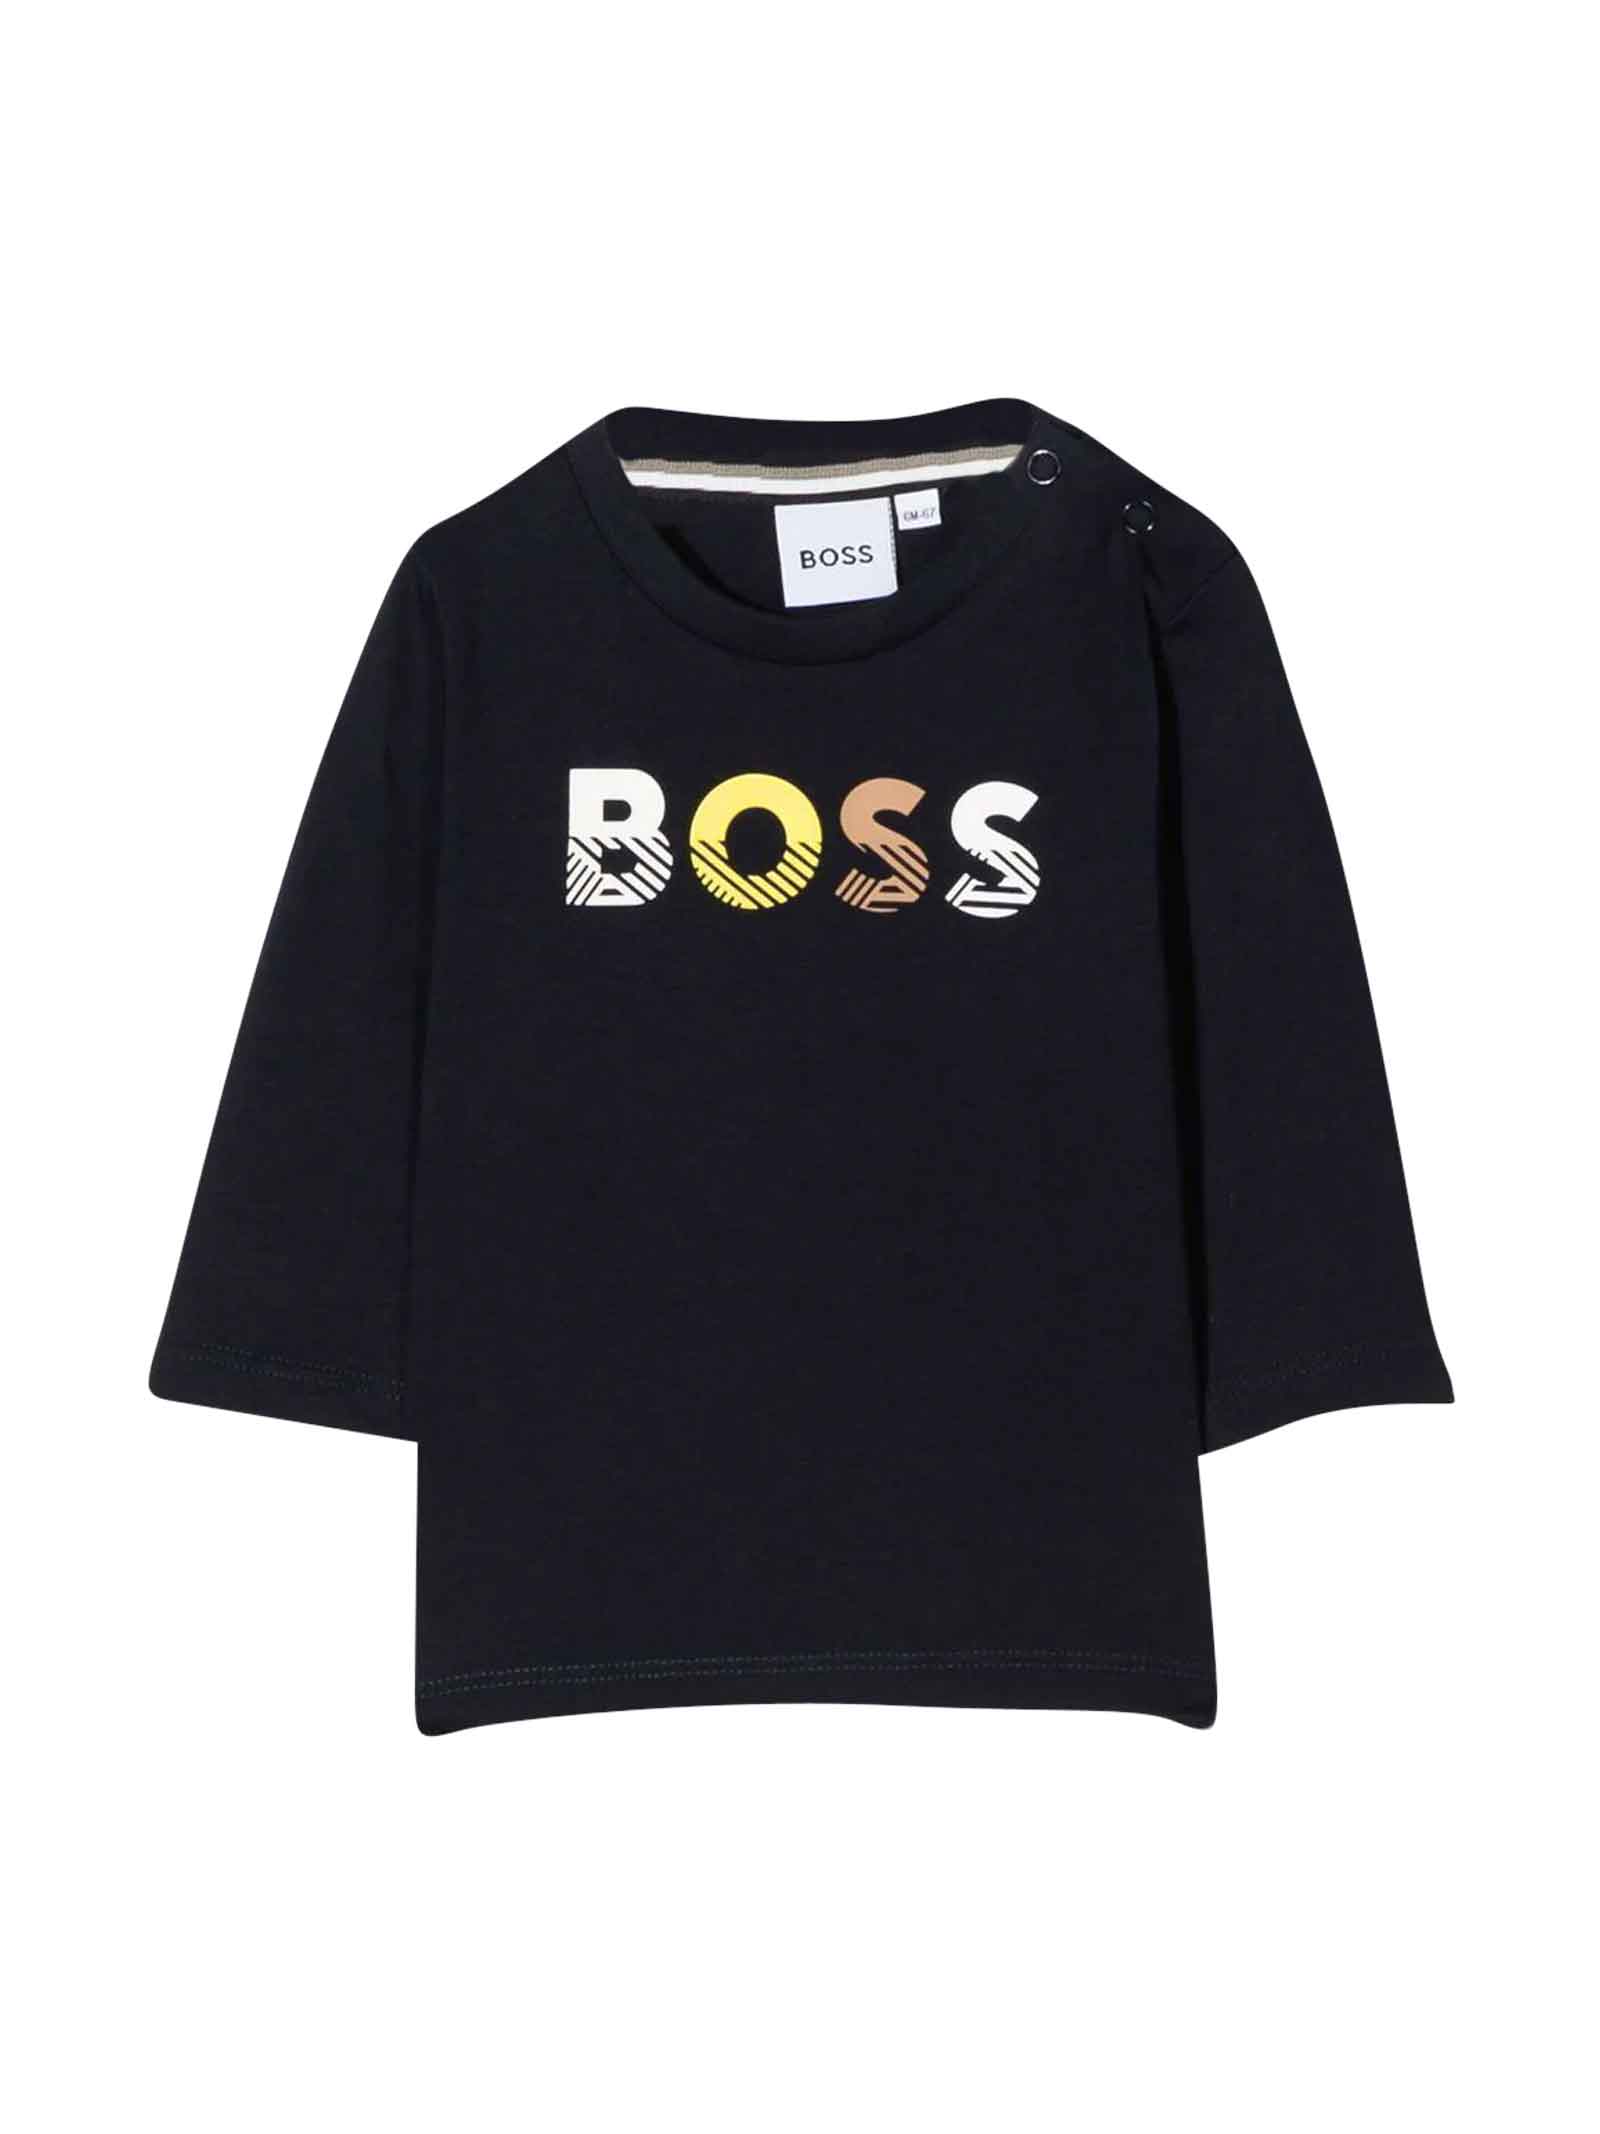 Hugo Boss Long-sleeved T-shirt Boy